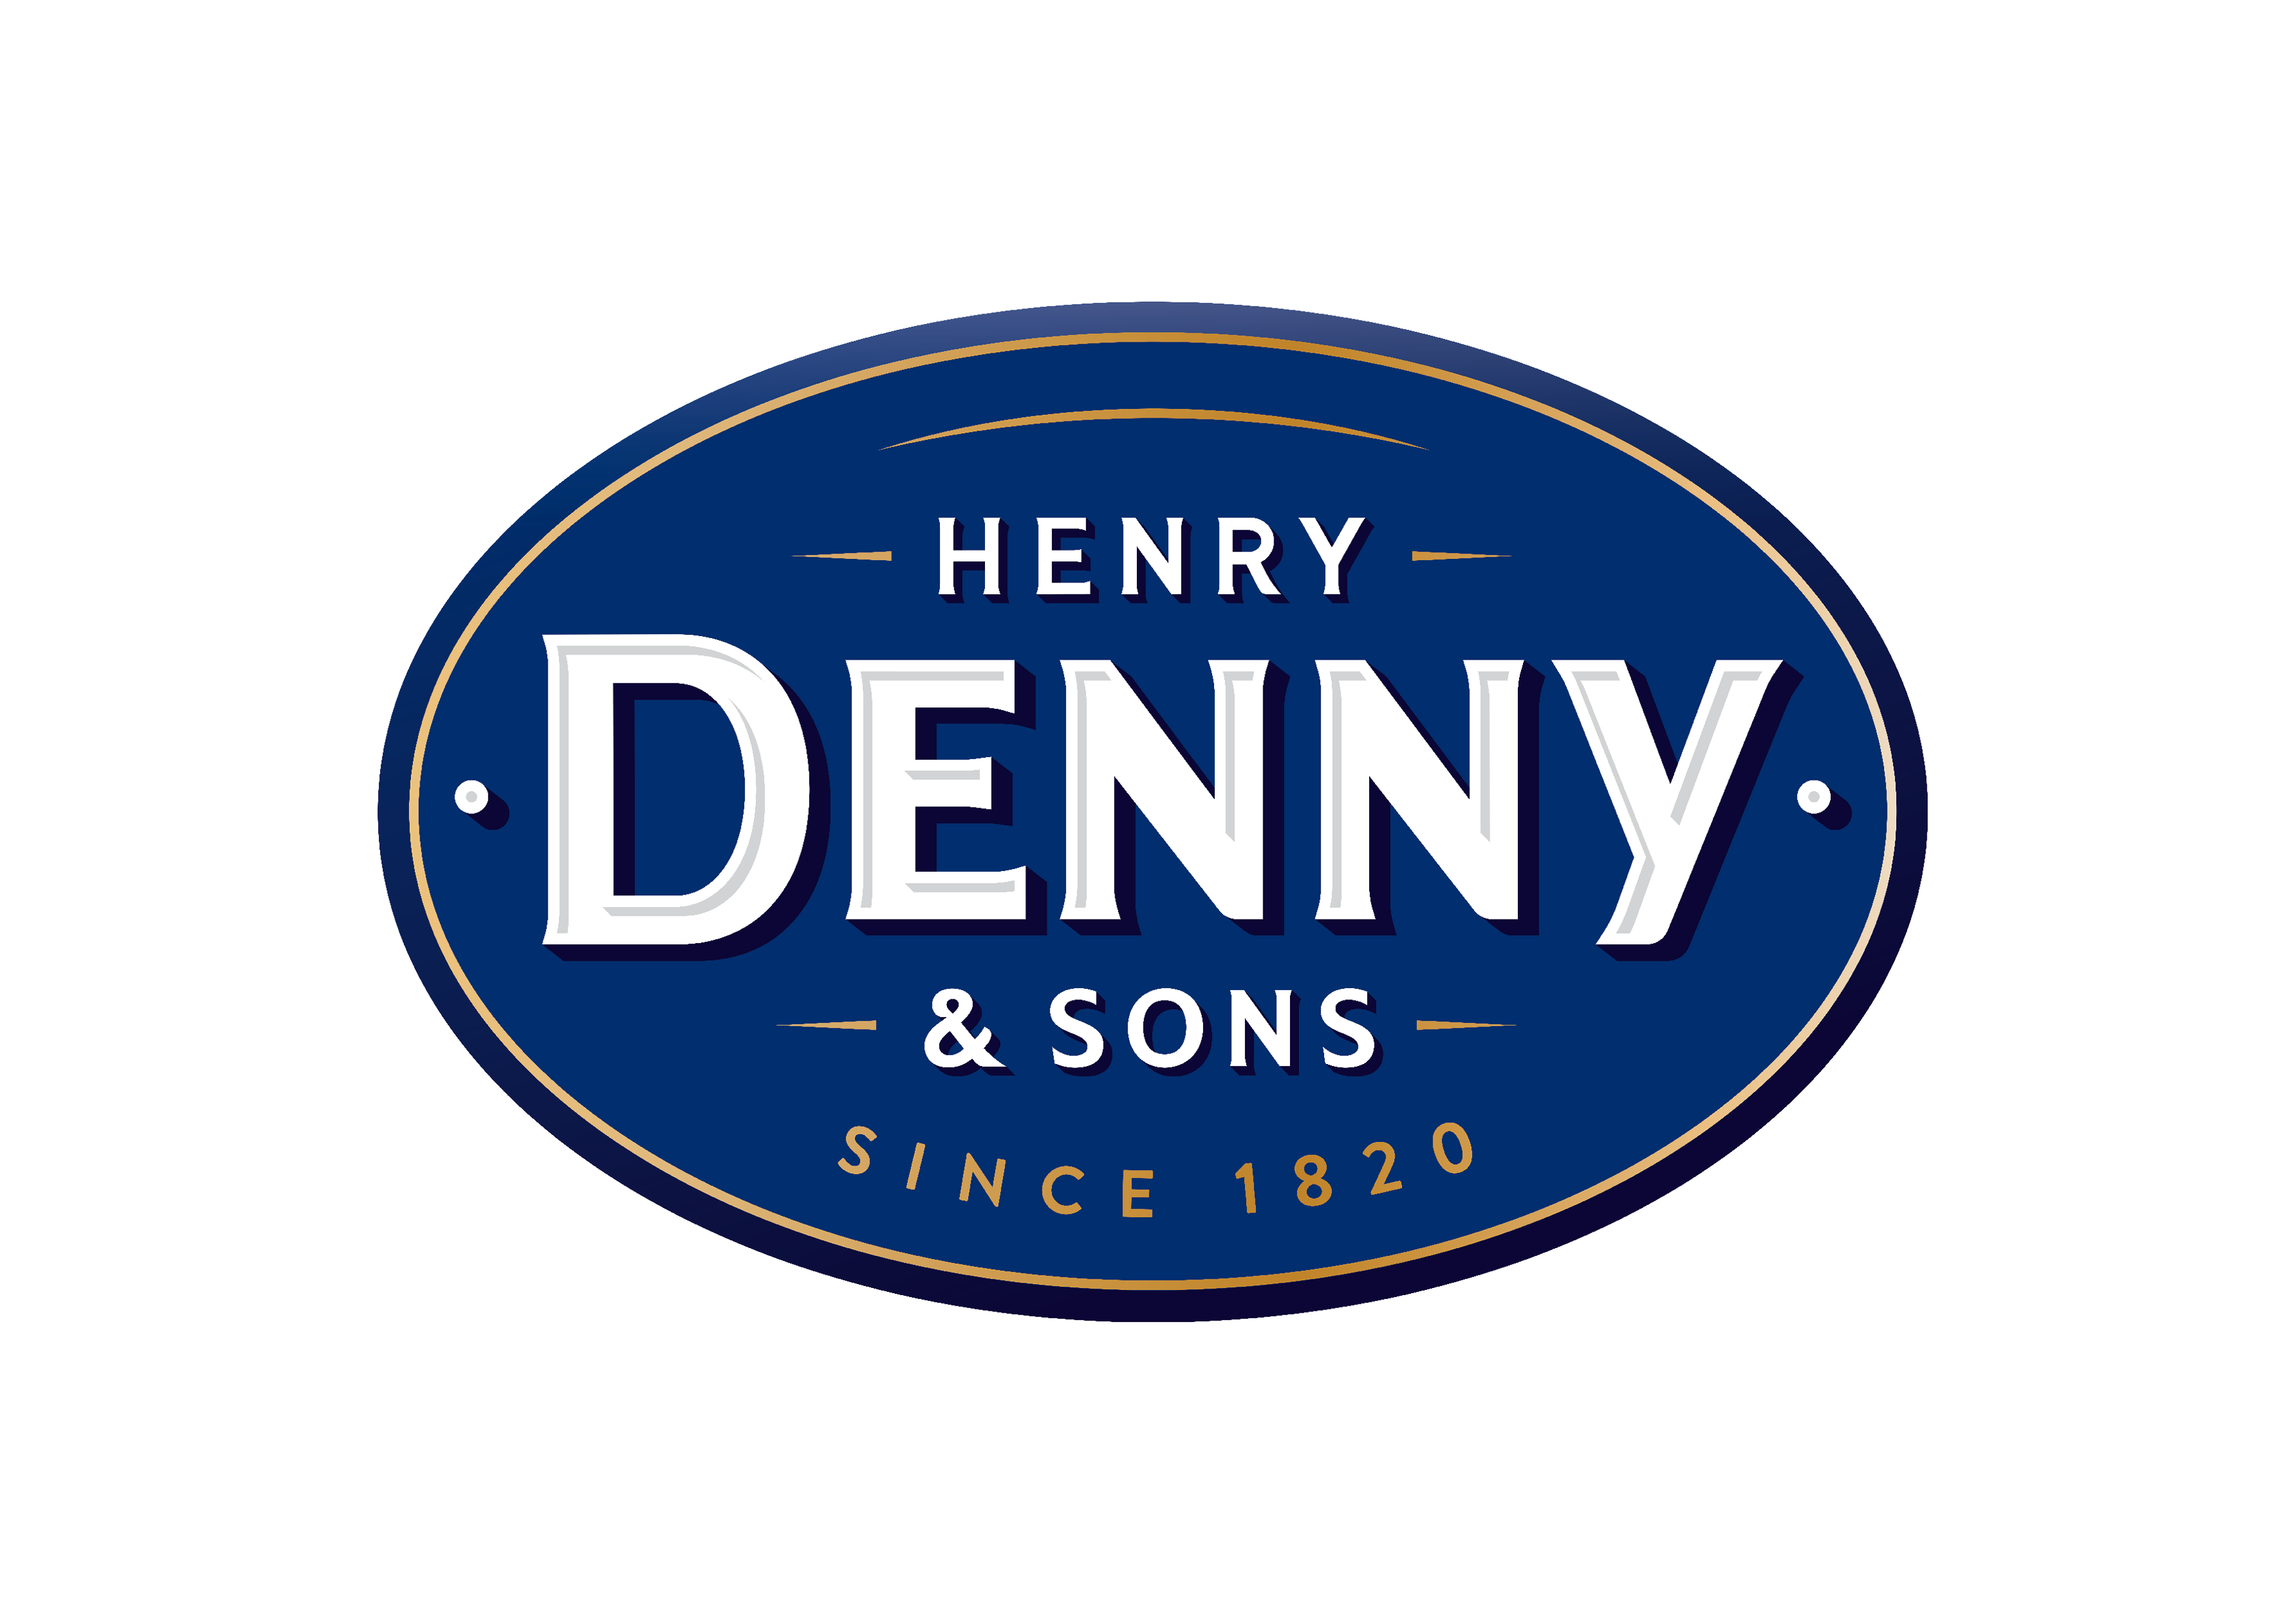 Henry Denny & Sons